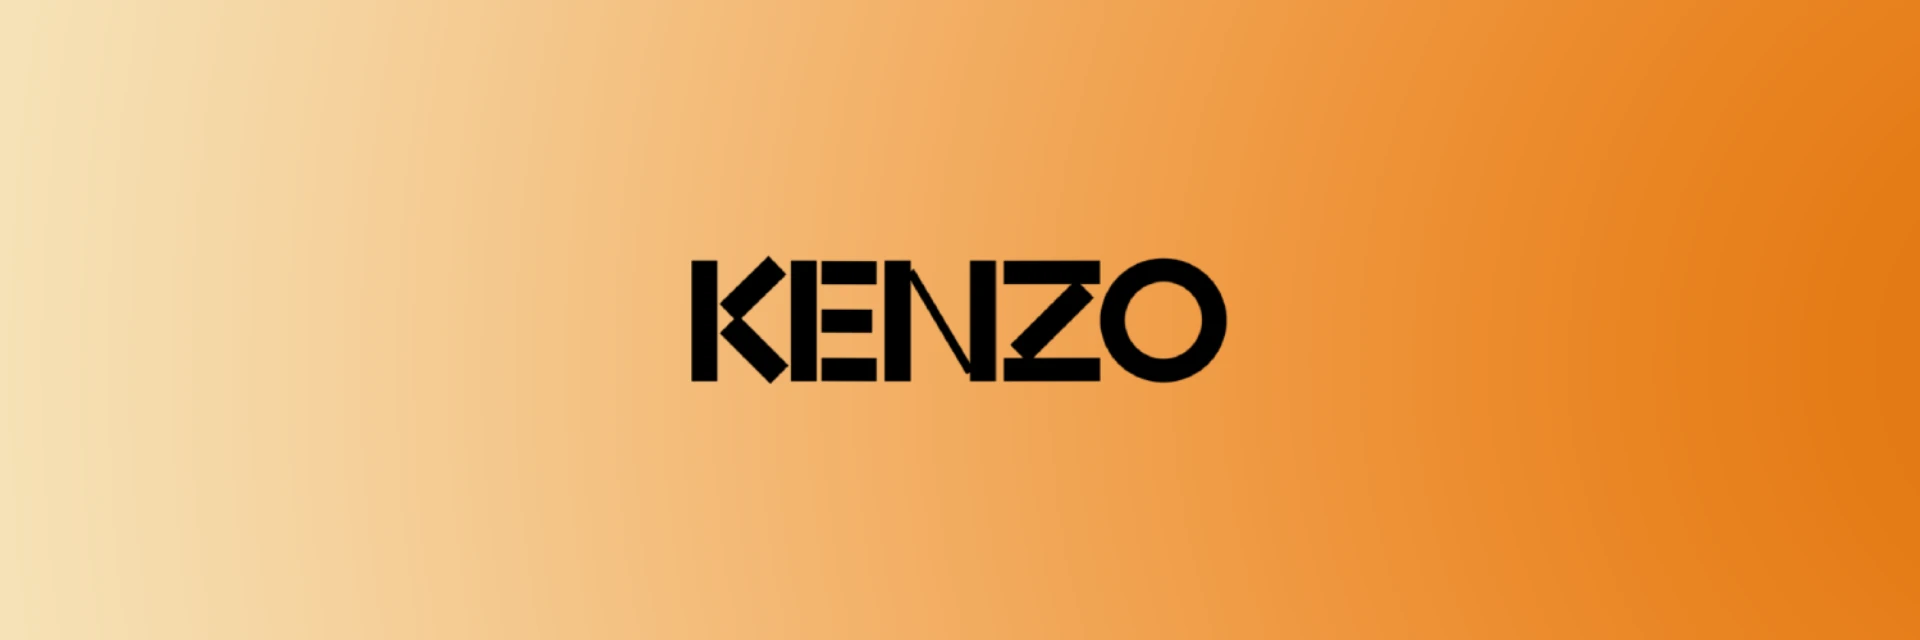 Kenzo Perfume Brand Banner Image